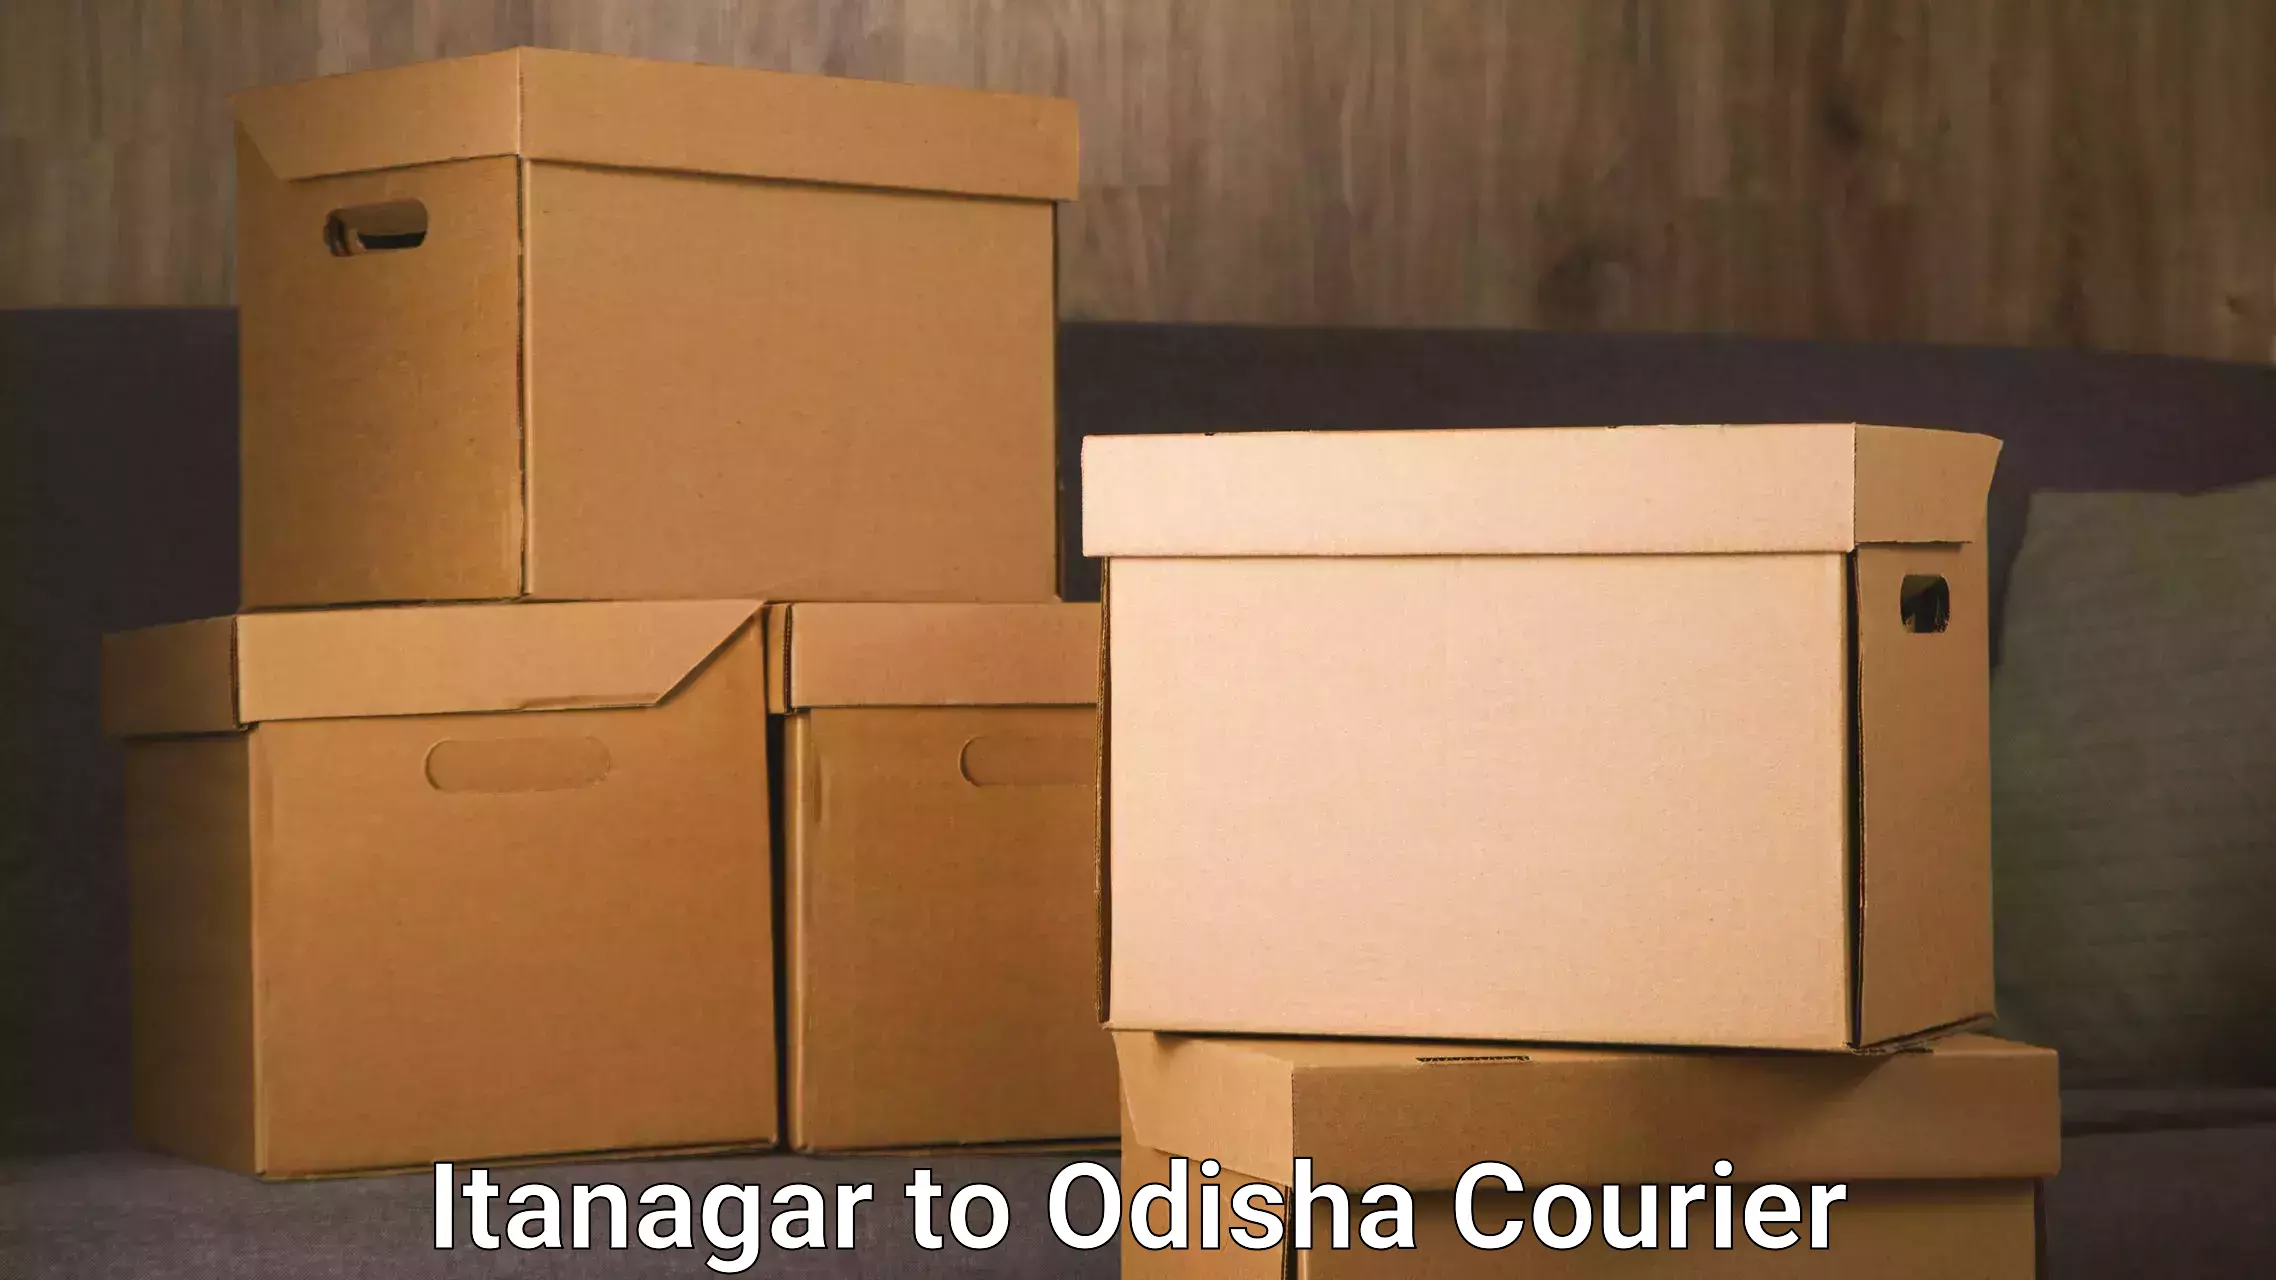 Nationwide parcel services Itanagar to Raruan